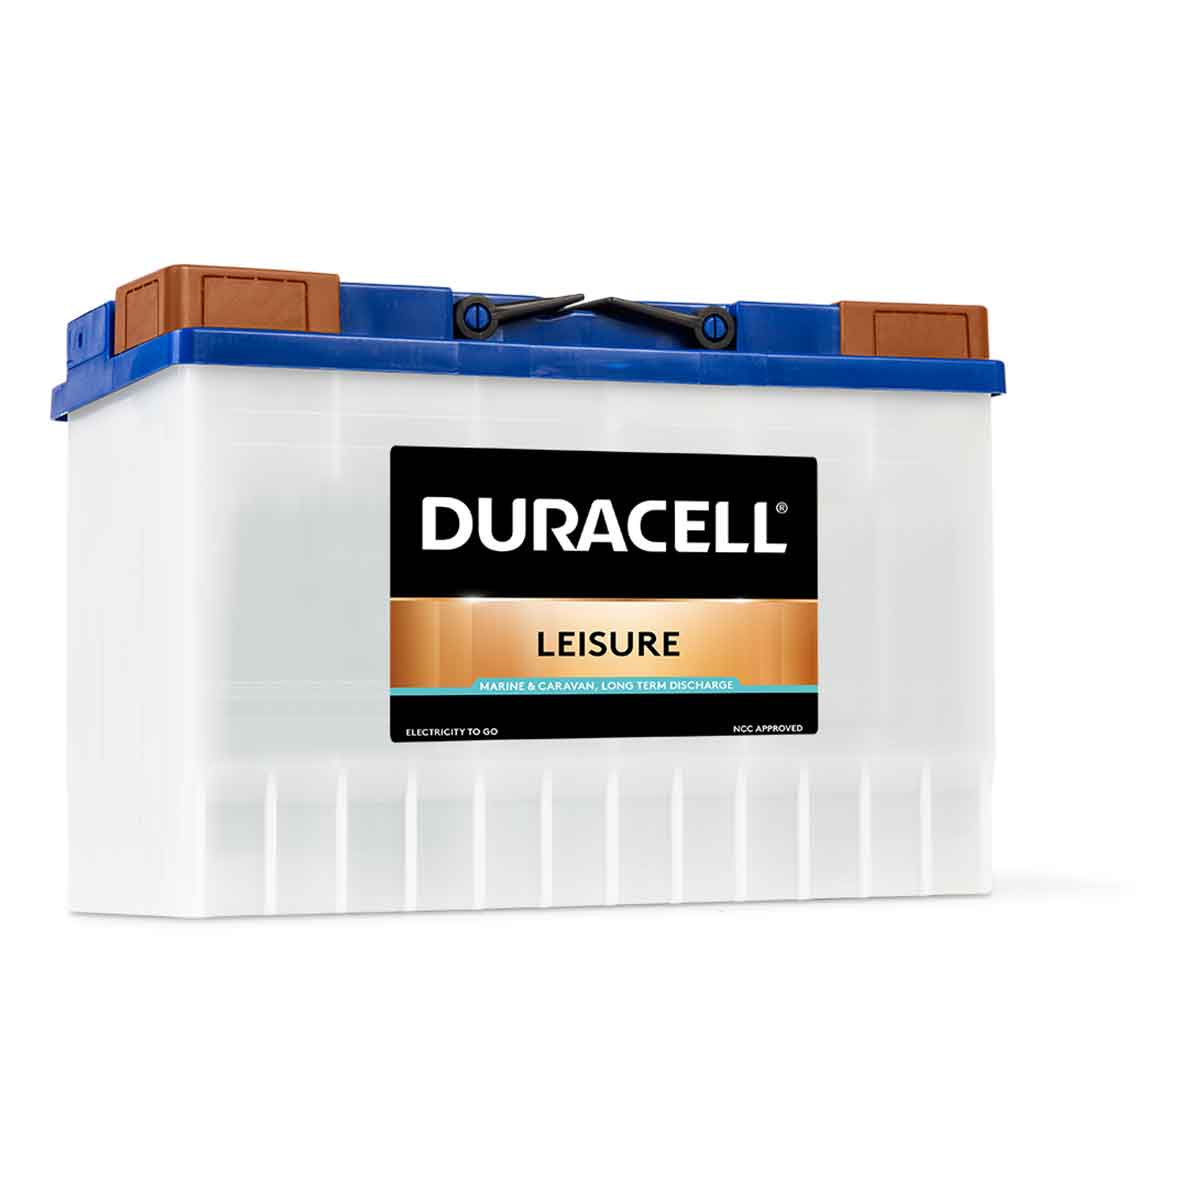 Duracell-Leisure-Battery.jpg